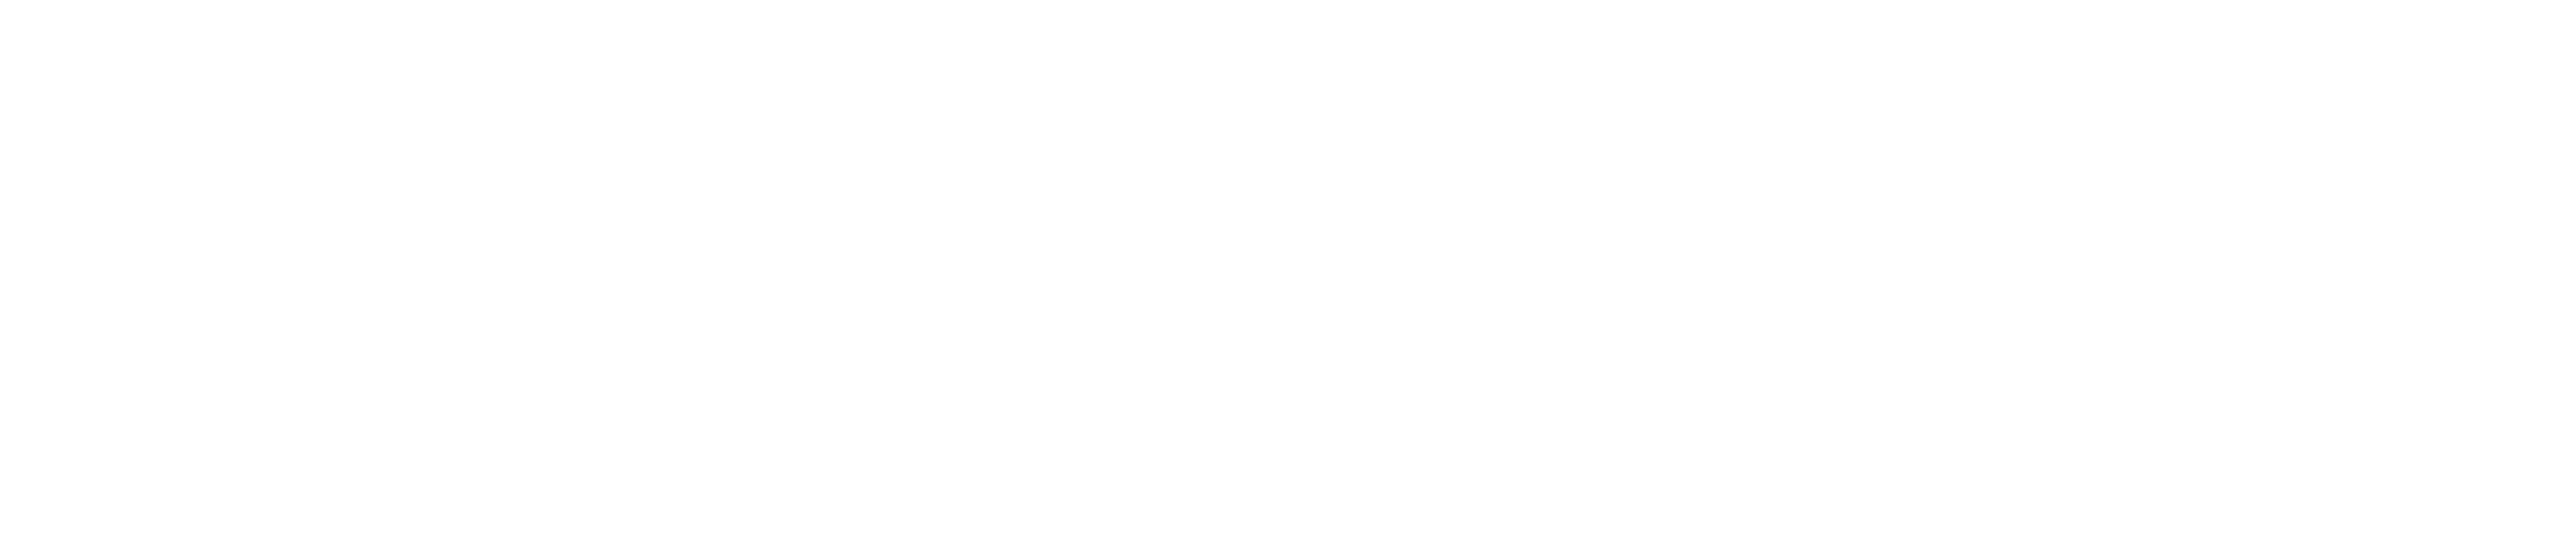 Stephenson Advisory Group Logo